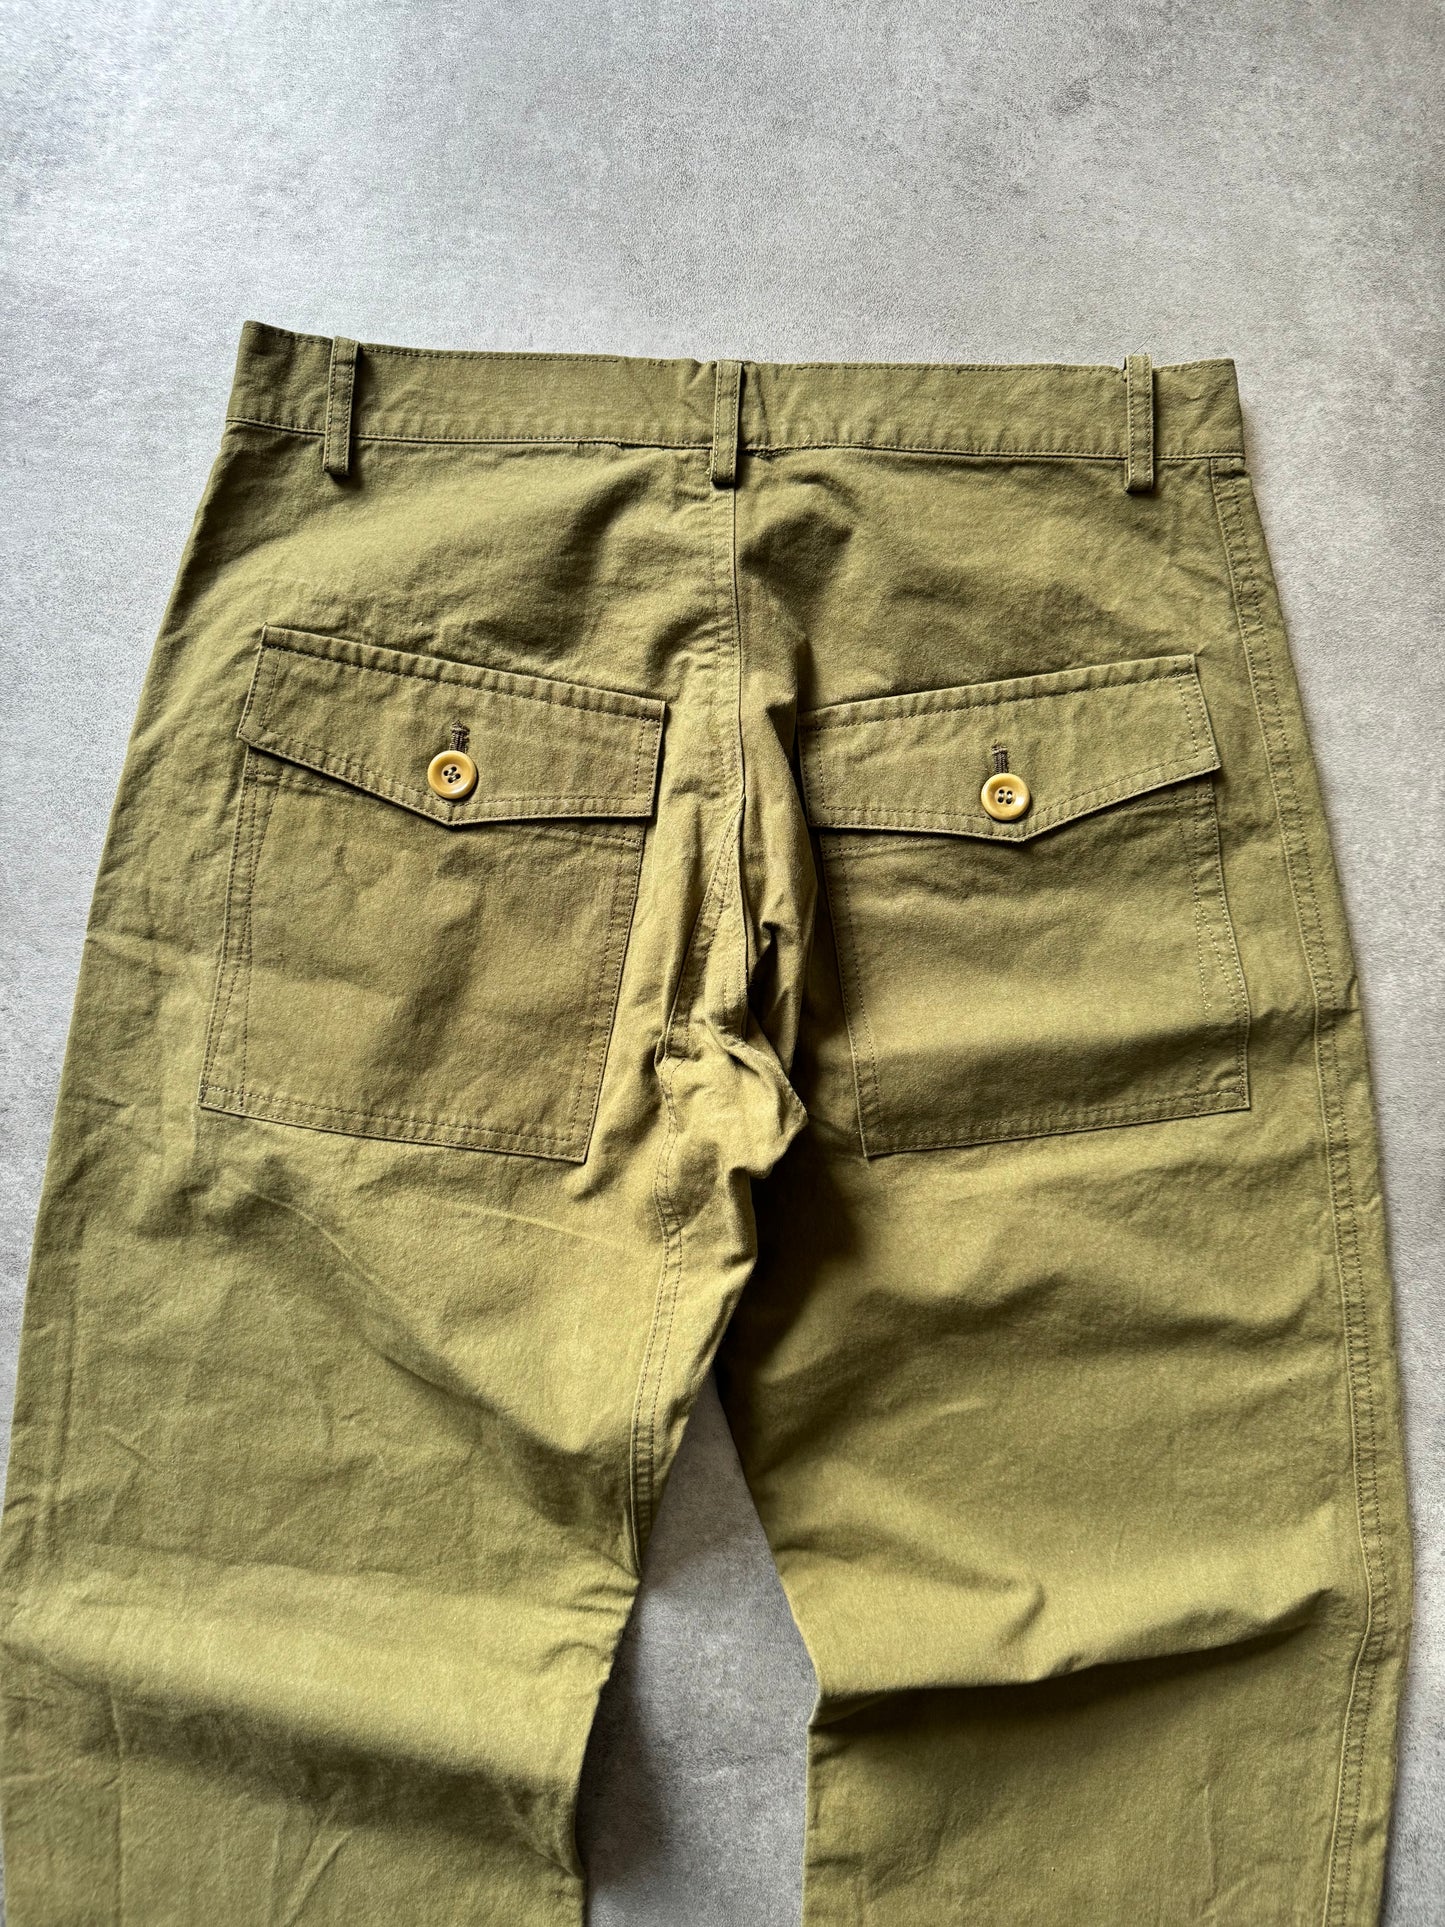 Yohji Yamamoto Olive Cargo Structured Pants (M) - 6